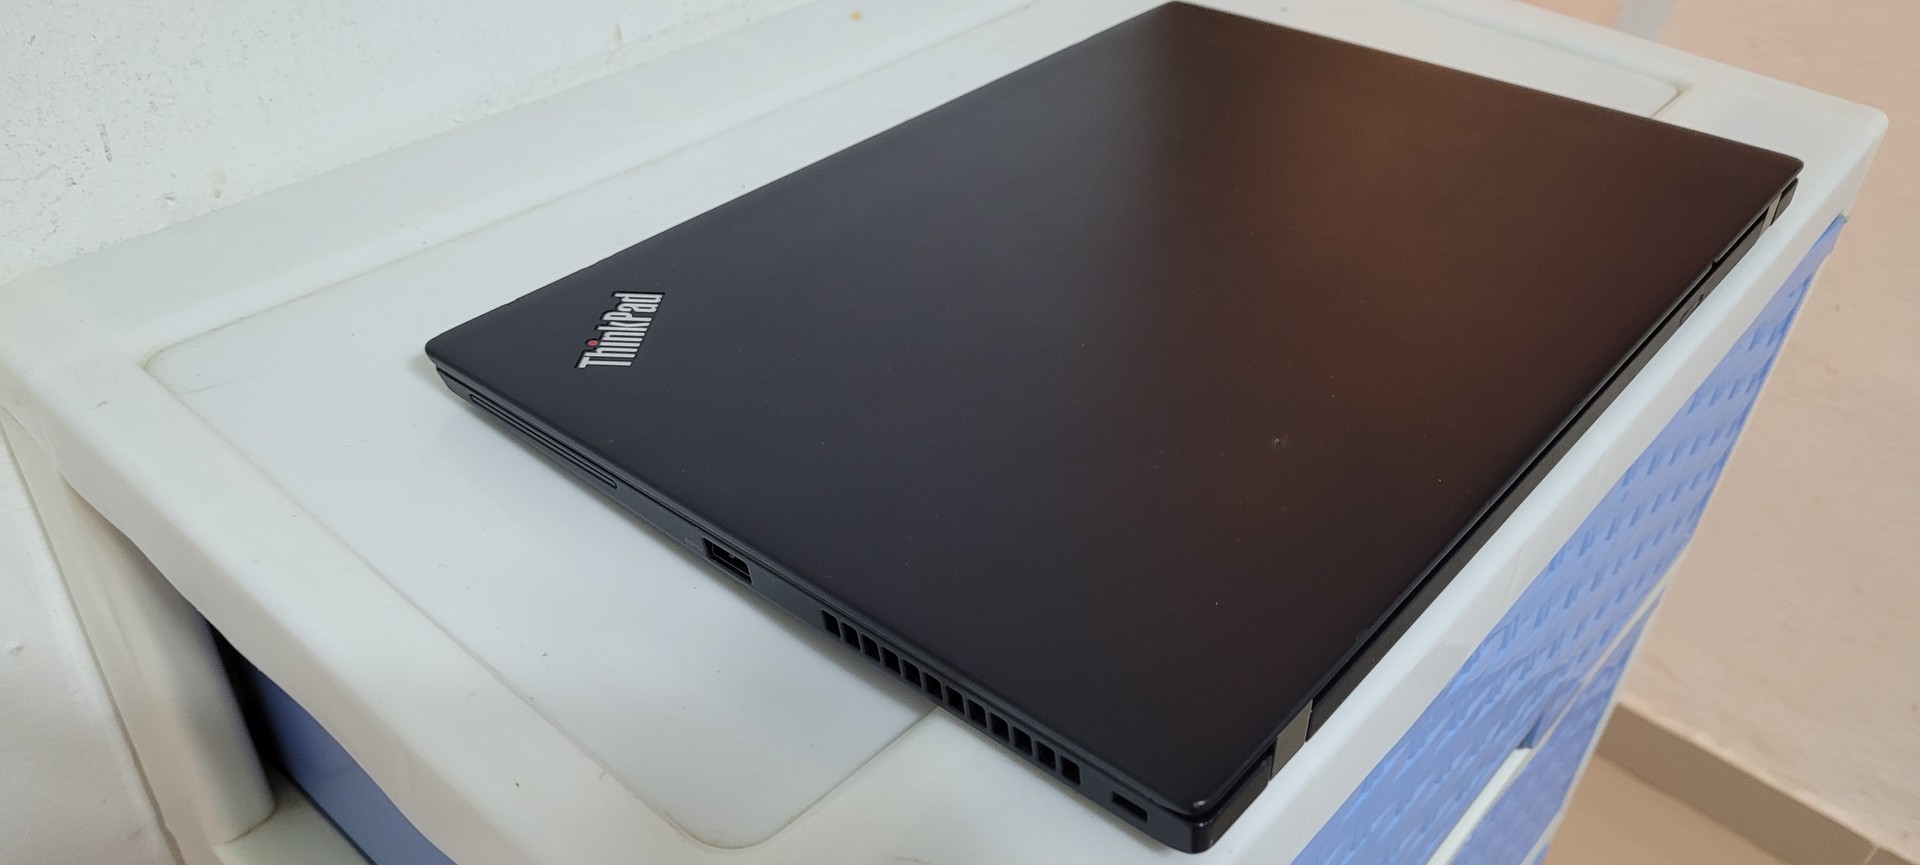 computadoras y laptops - Lenovo T460 14 Pulg Core i5 6ta Gen Ram 8gb ddr4 Disco 256gb SSD Solido hdmi 2